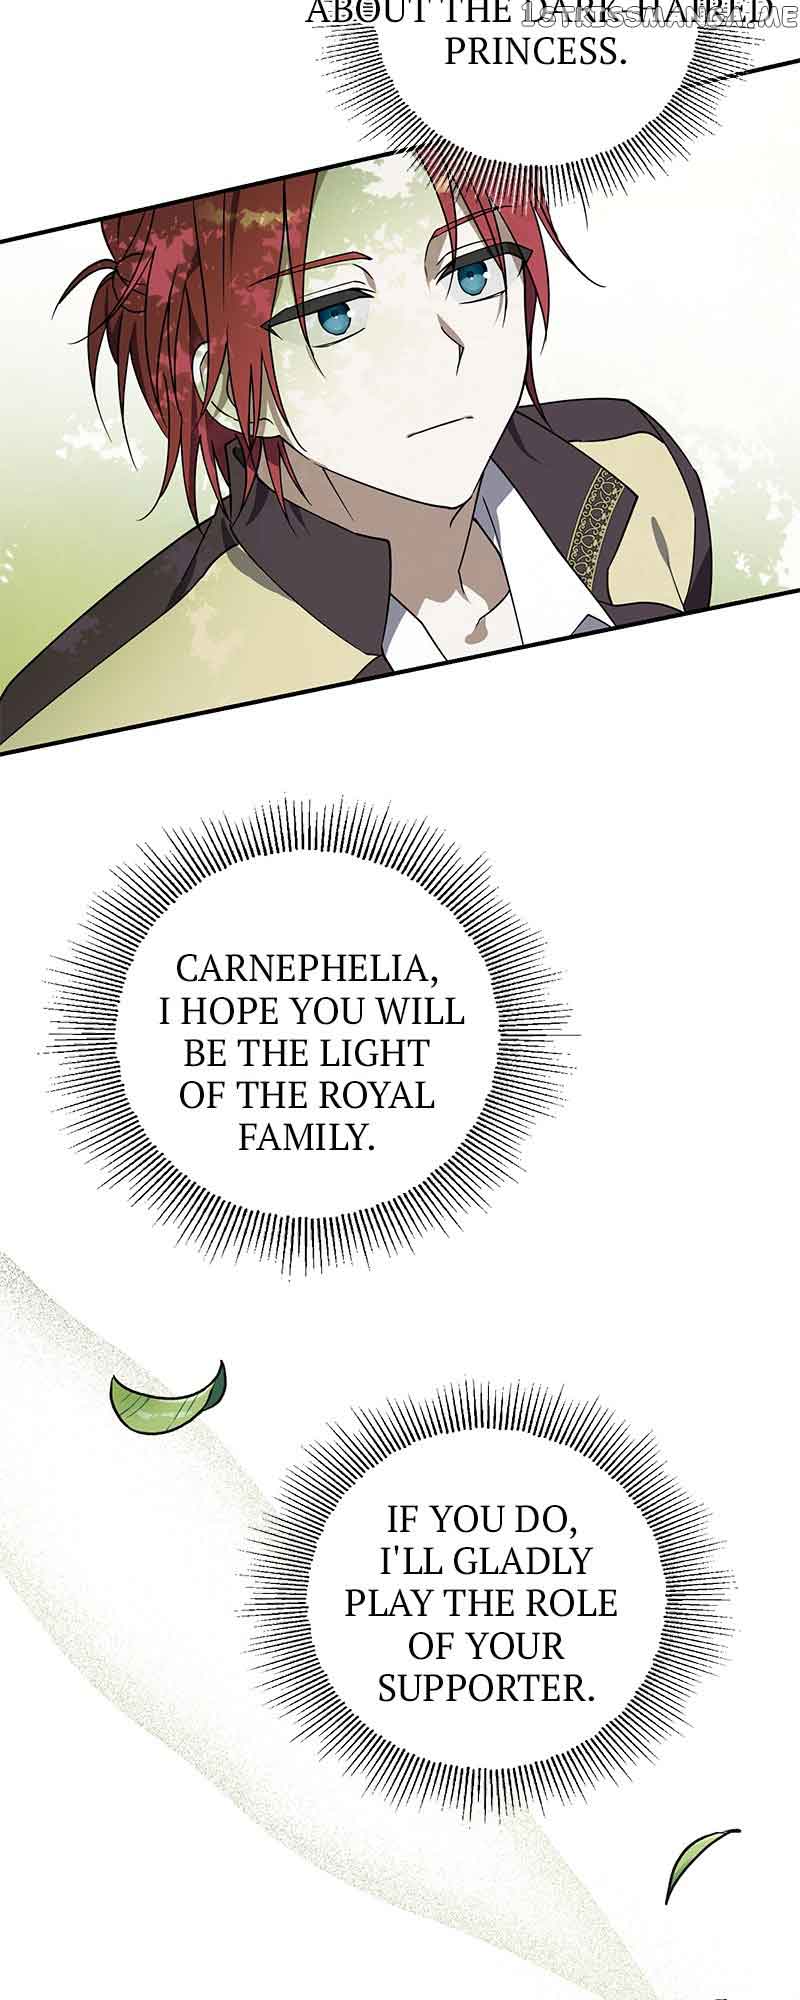 Carnephelia’s Curse is Never Ending chapter 8